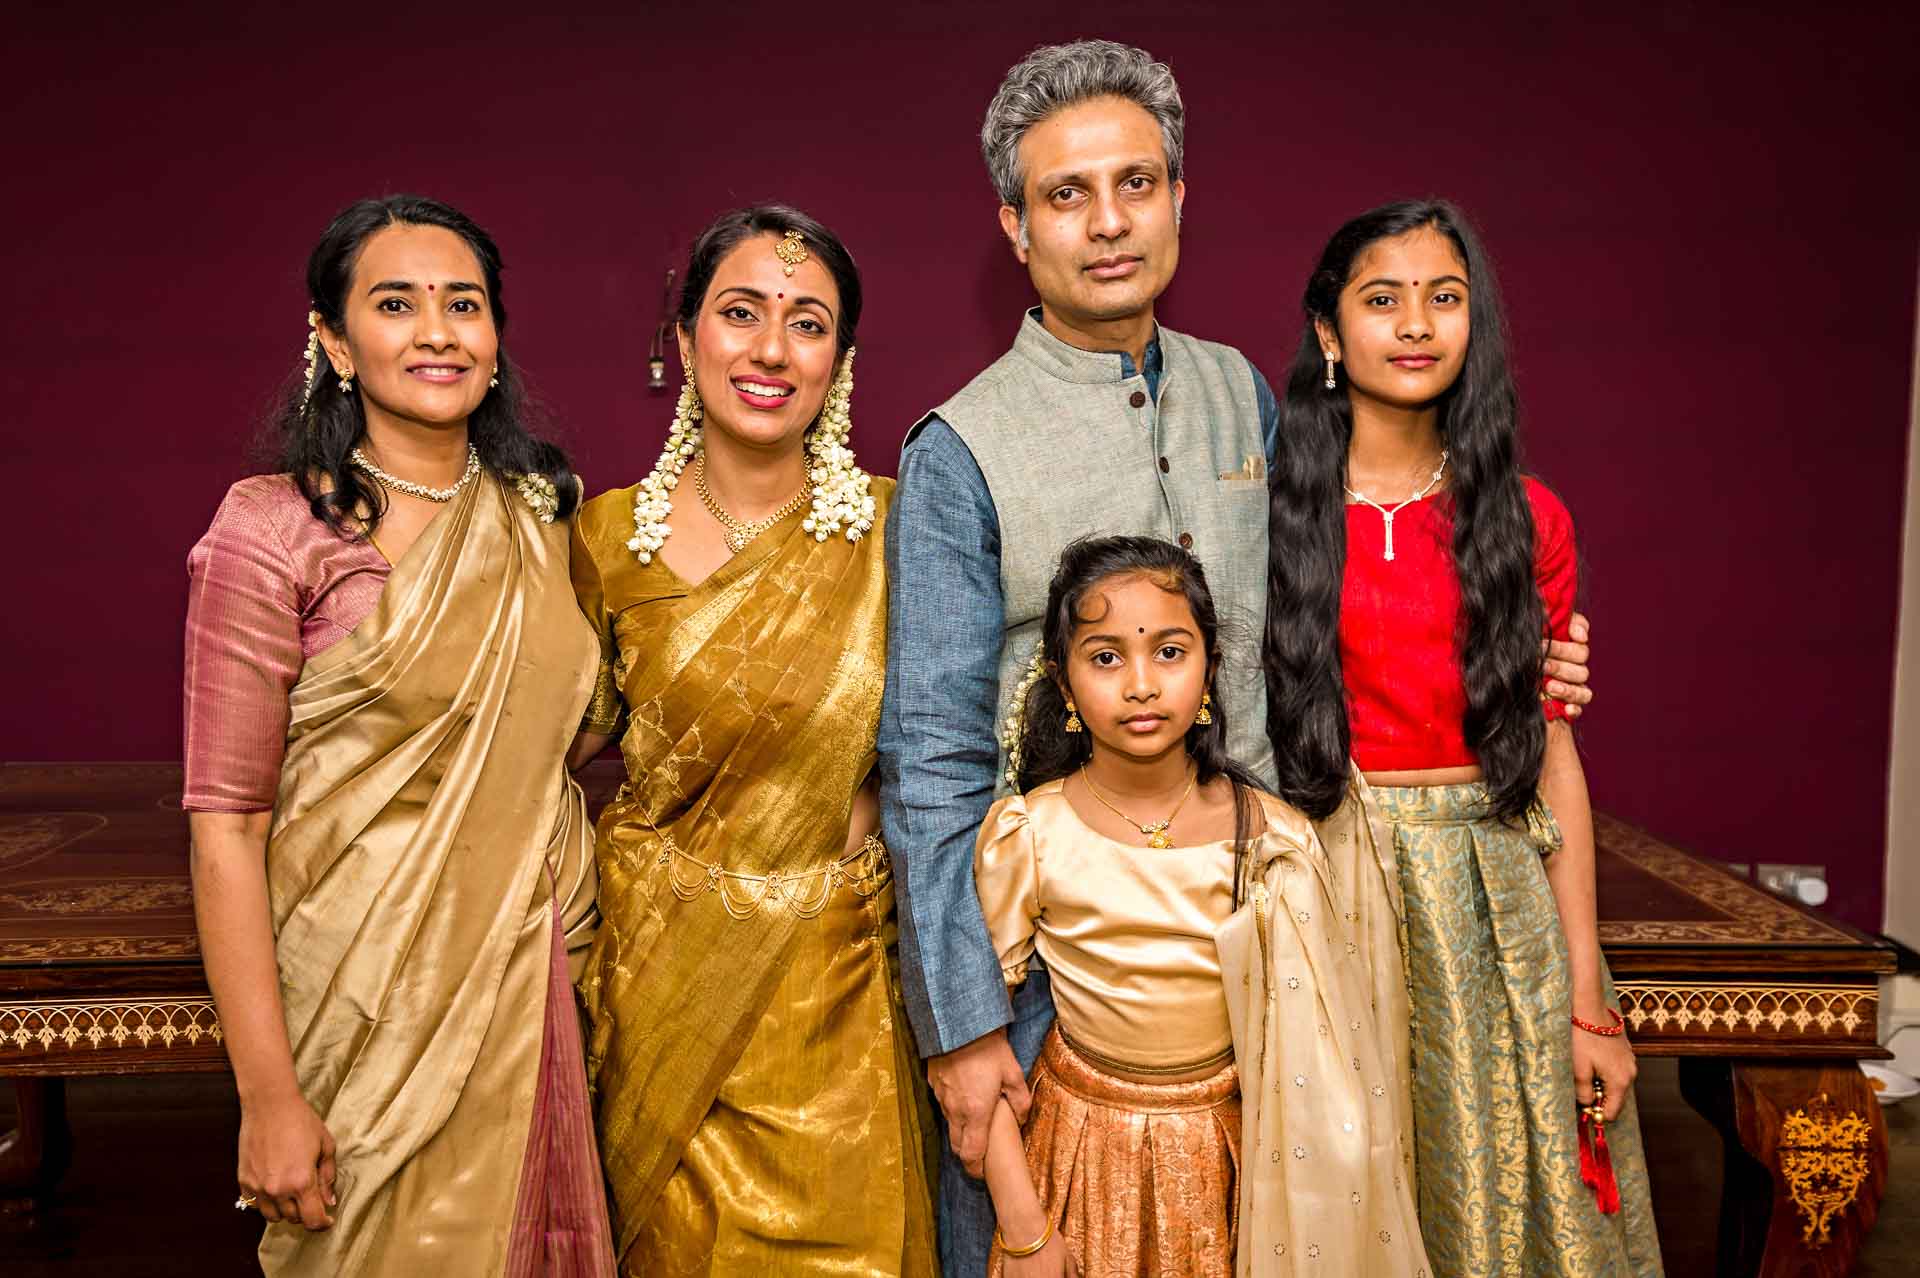 Family portrait taken at Indian Wedding in London